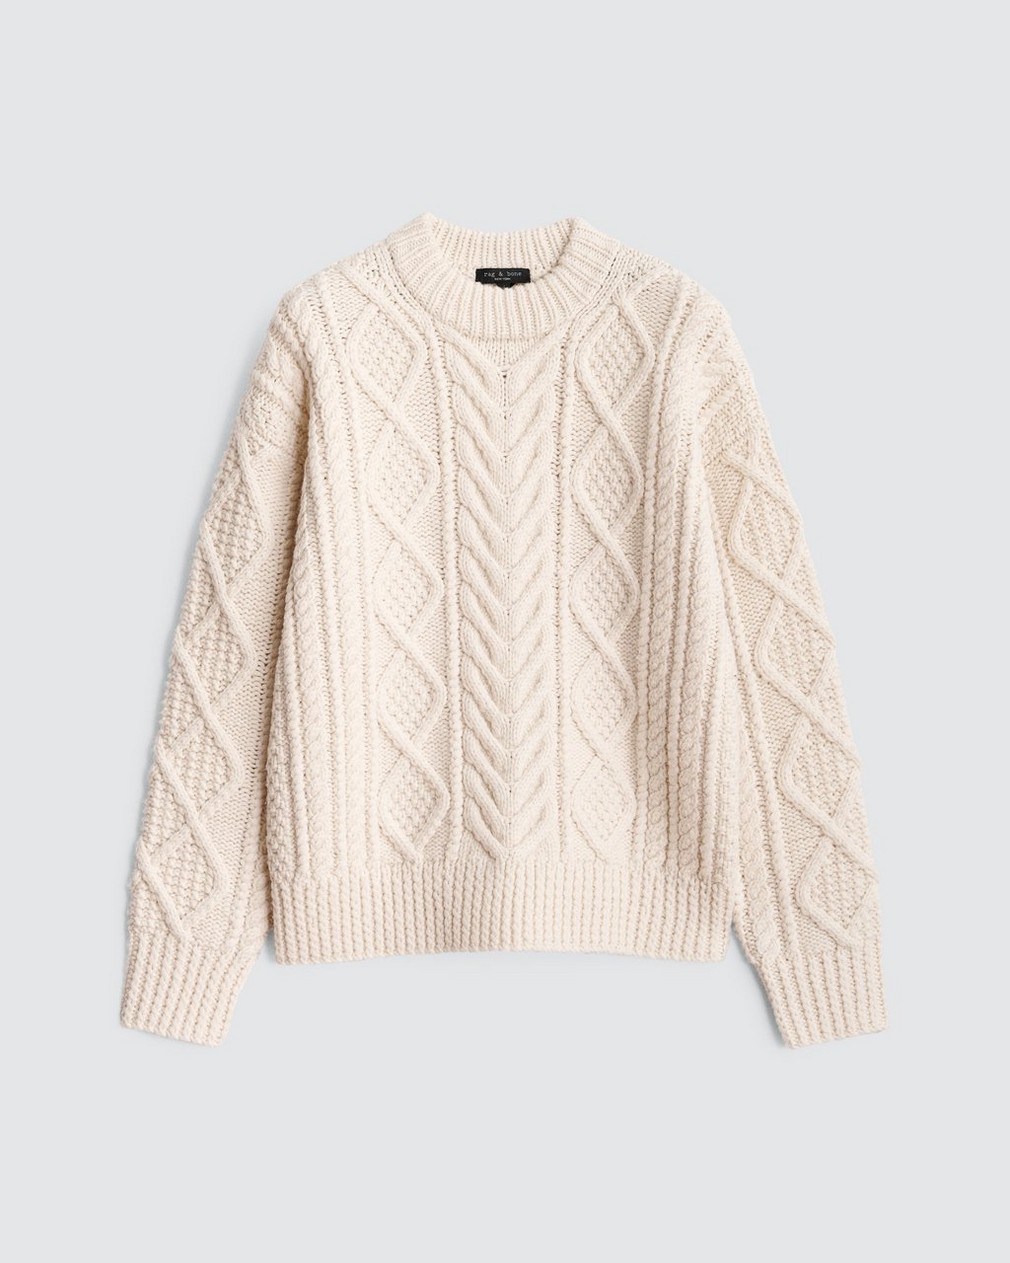 Spencer Handknit Wool Sweater